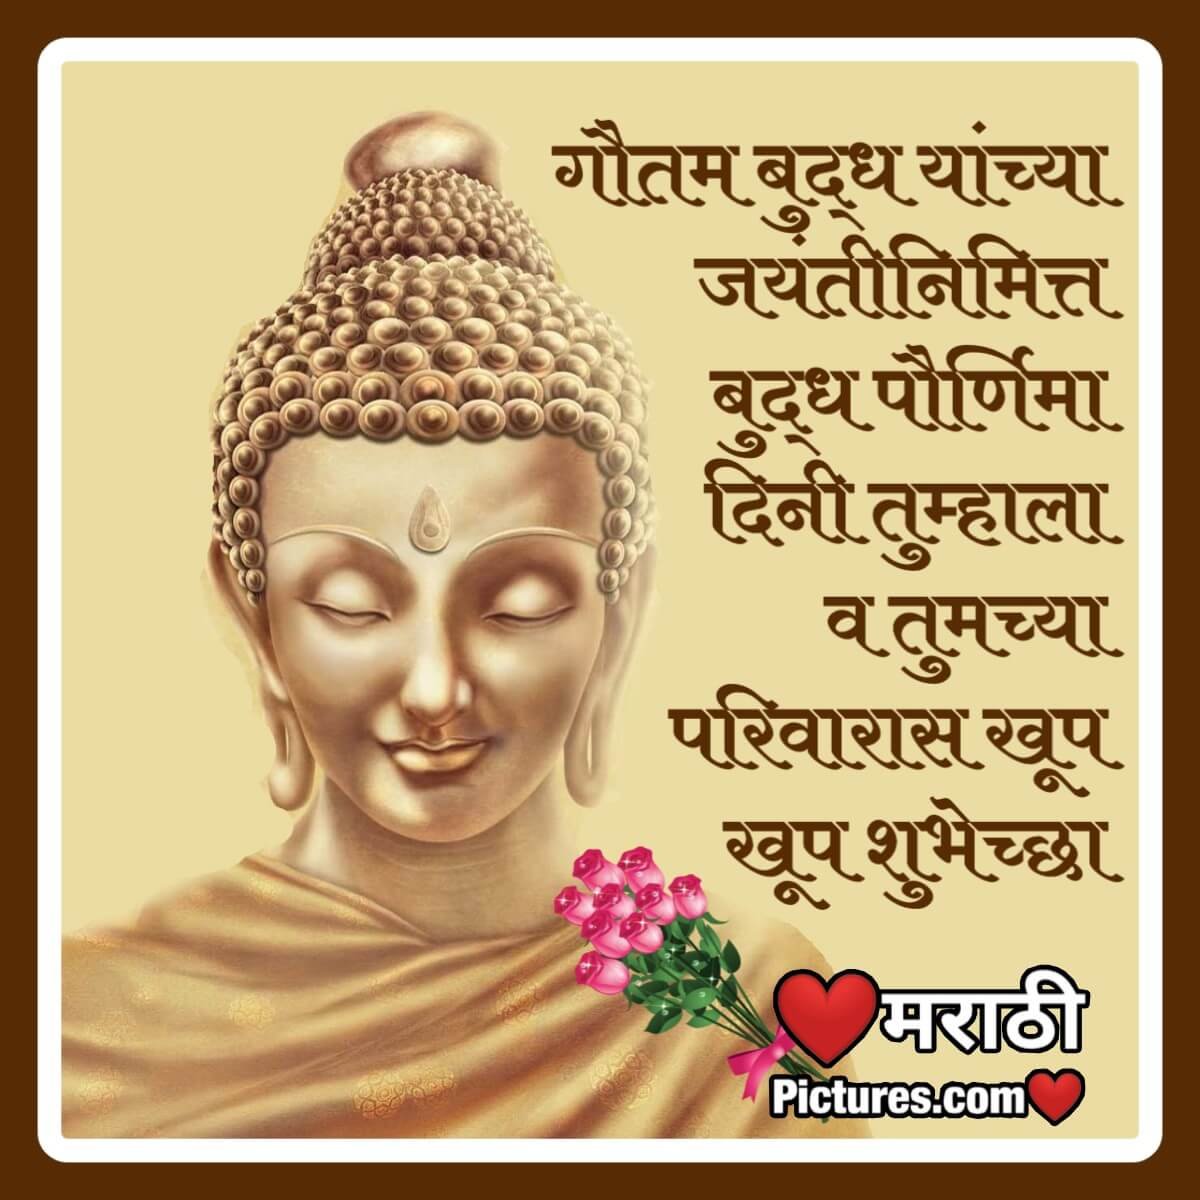 Buddh Purnima Chya Khup Khup Shubhechha